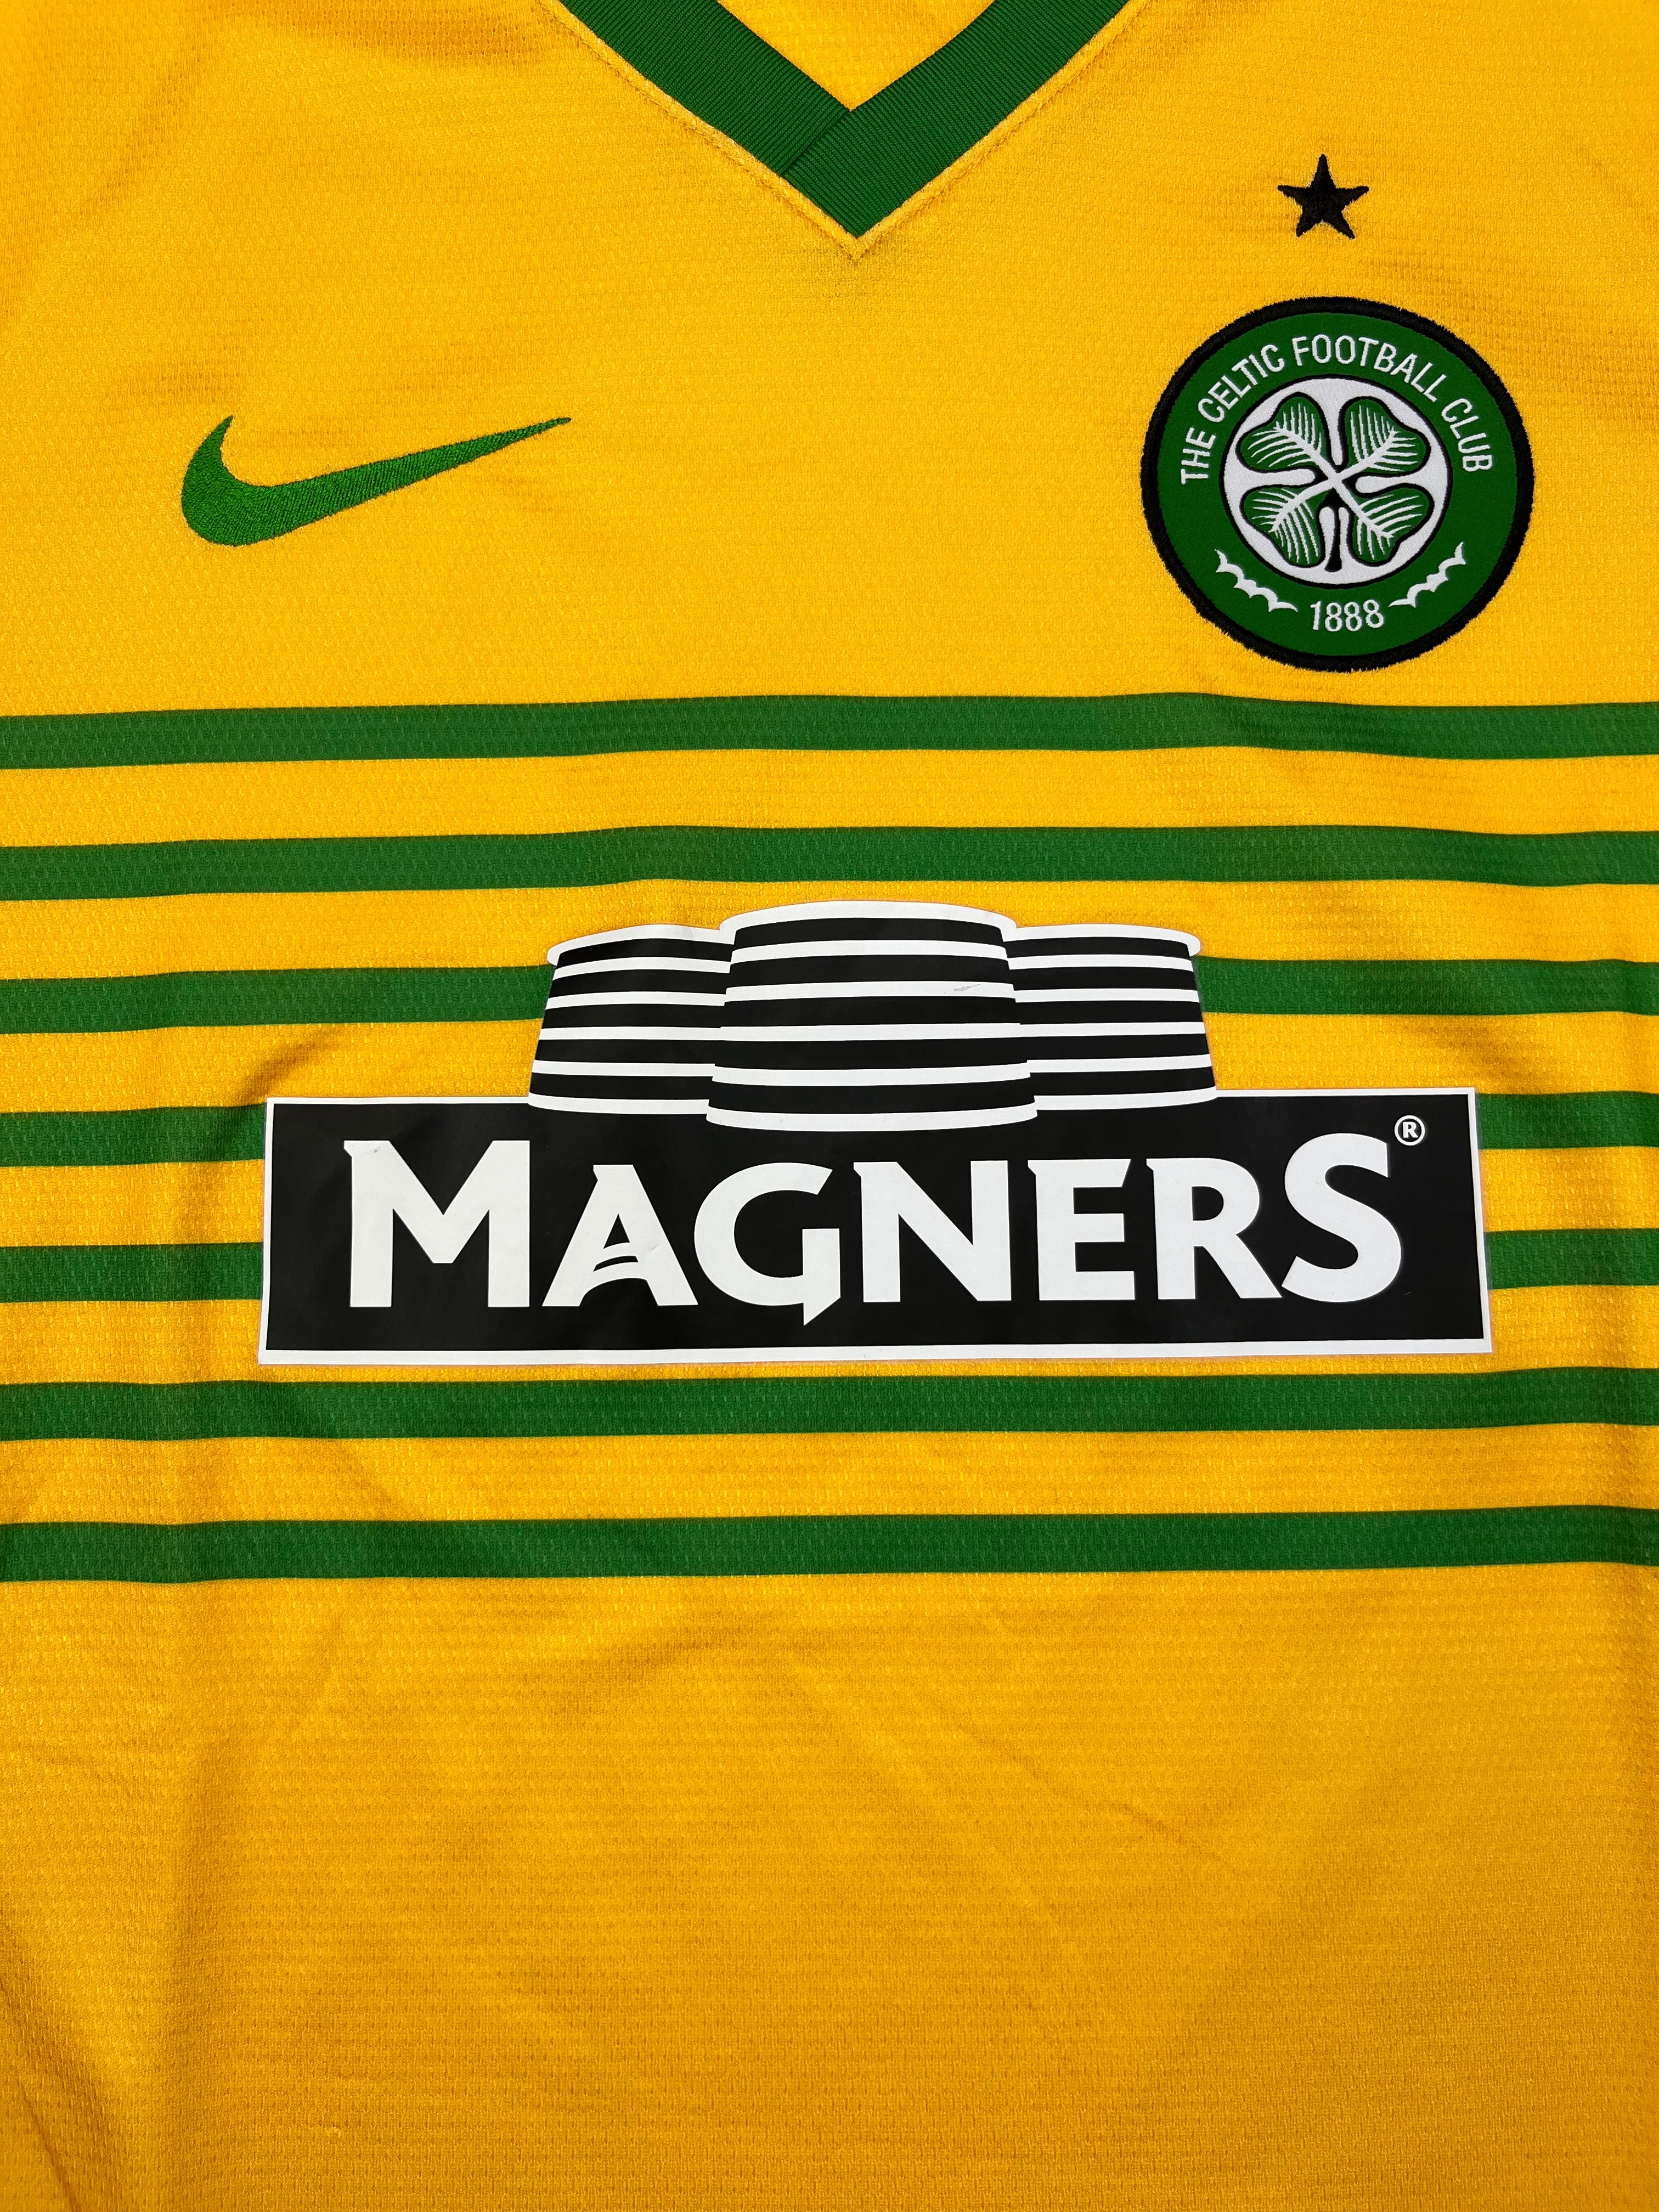 2013/14 Celtic Away Shirt (S) 9/10